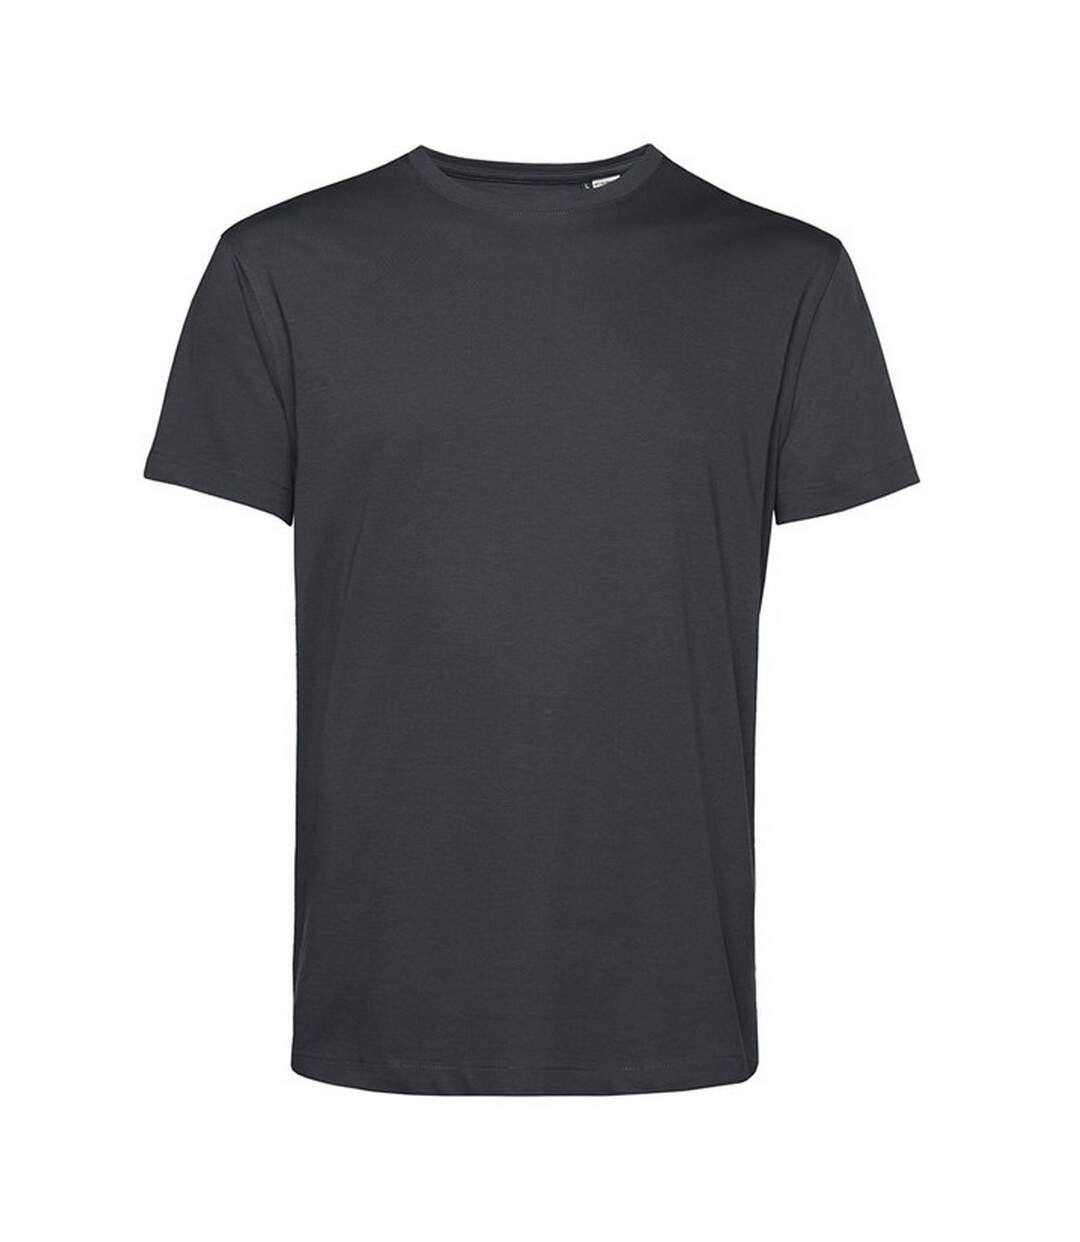 B&C - T-shirt E150 - Homme (Anthracite) - UTRW7787